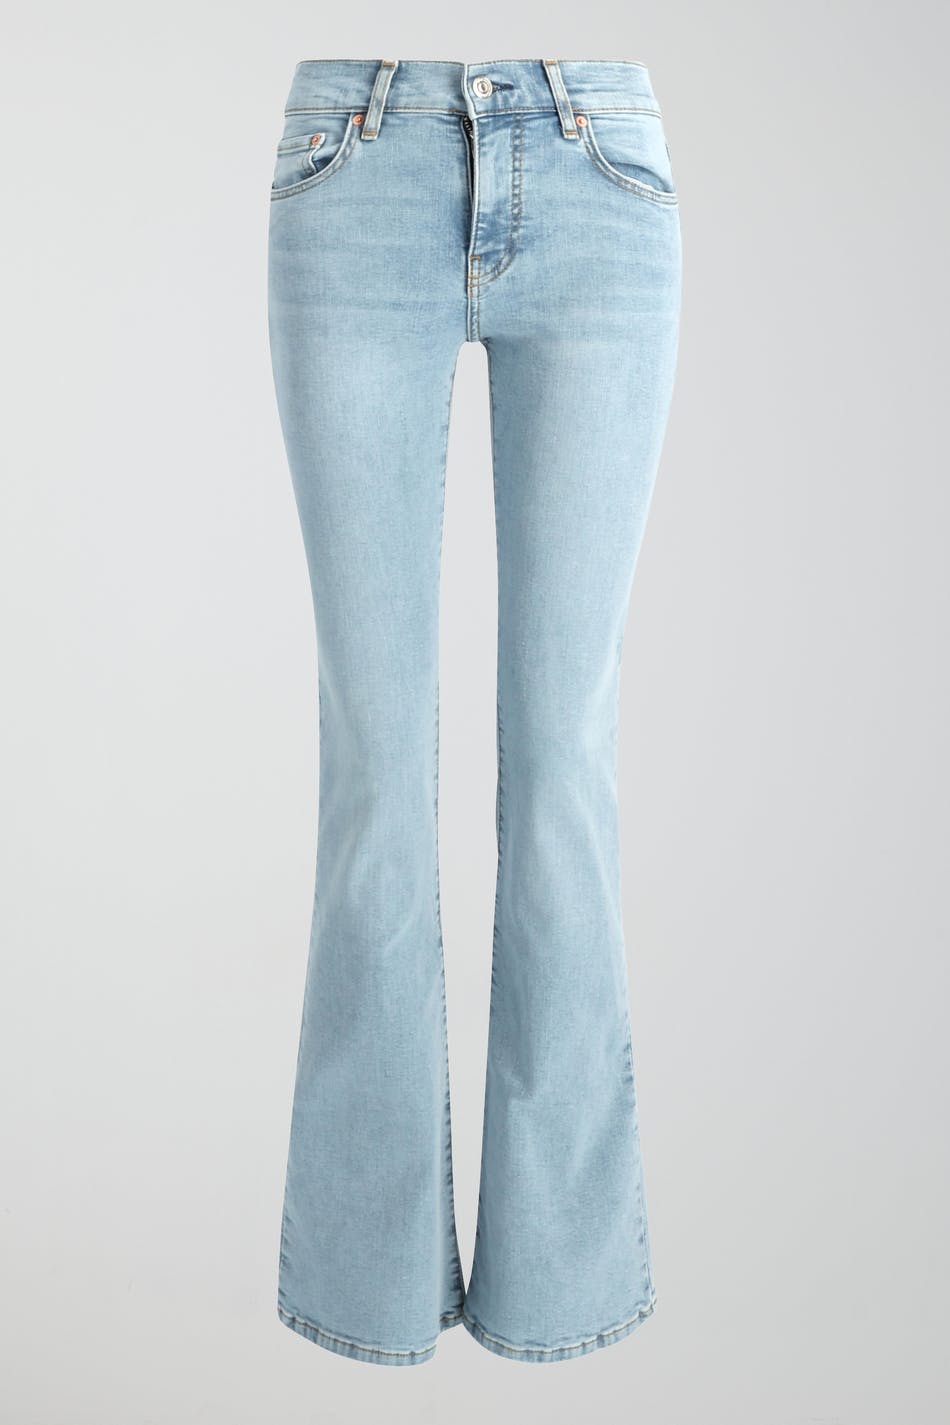 Low waist petite bootcut jeans